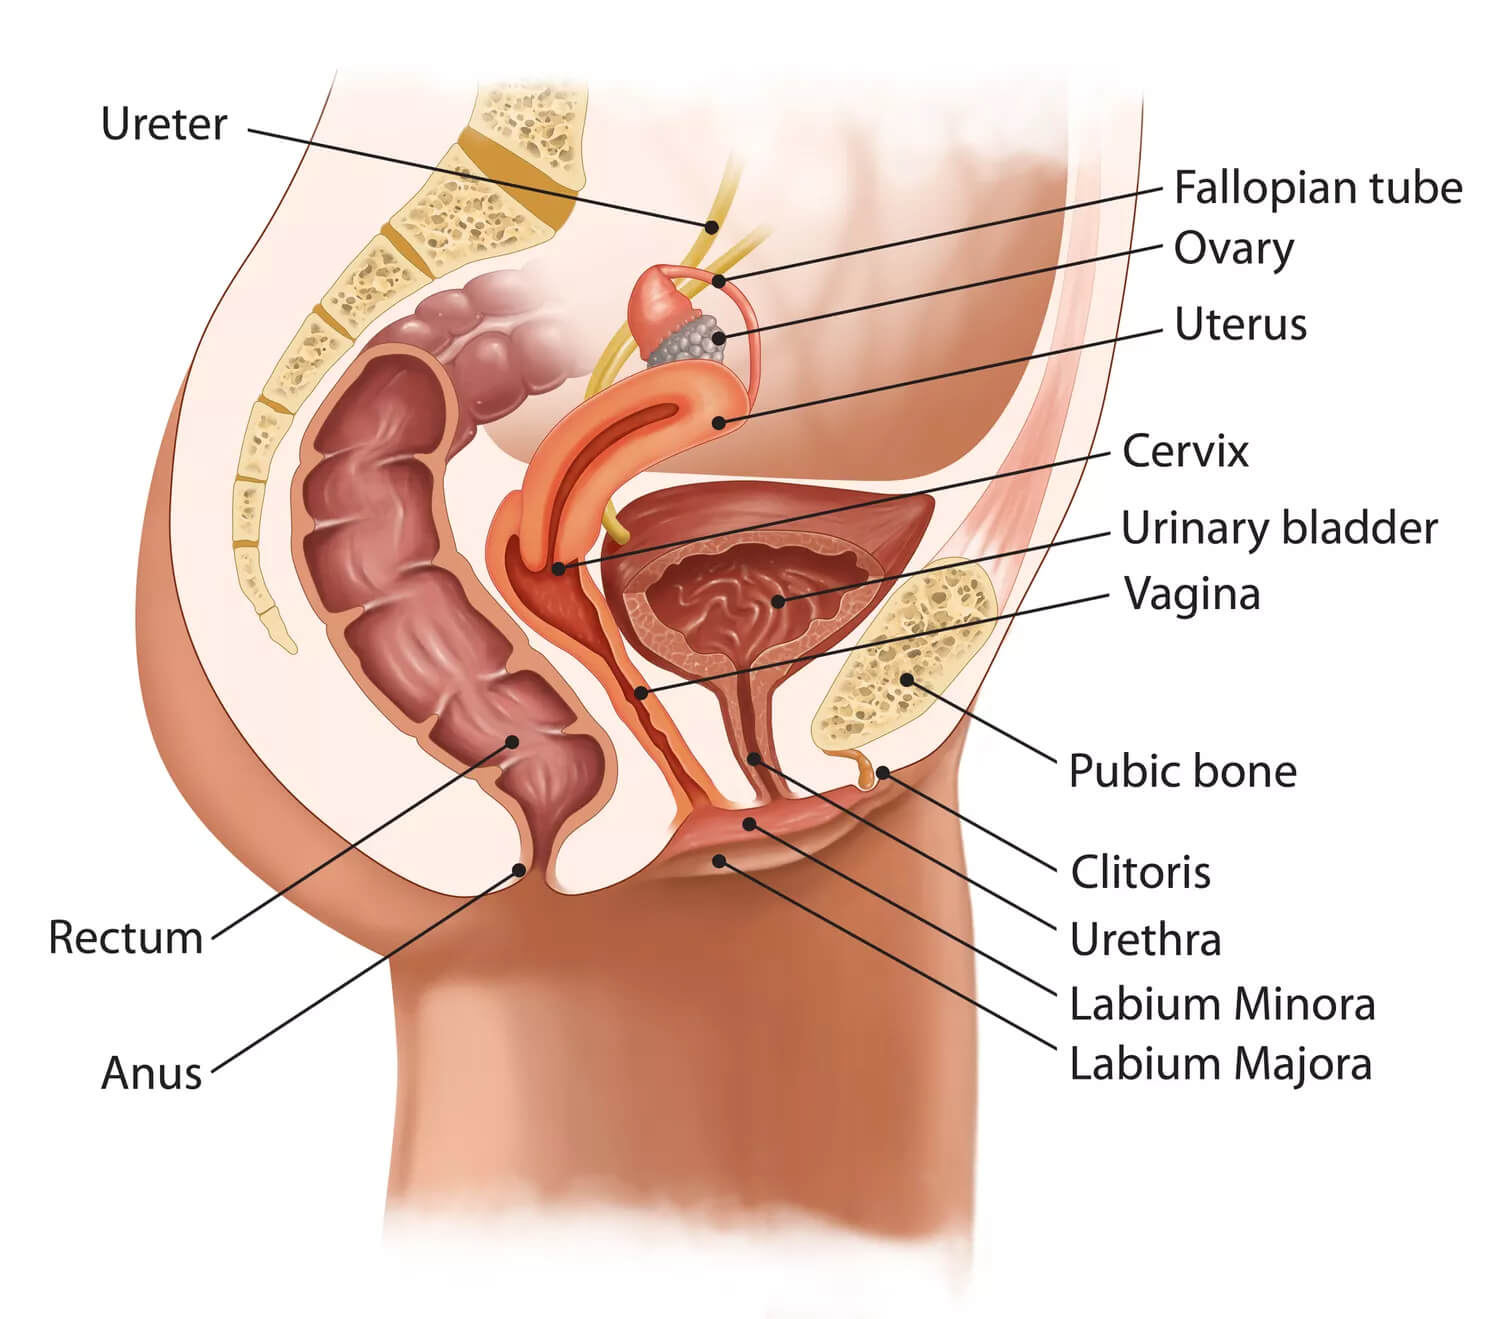 How to clean vulva?